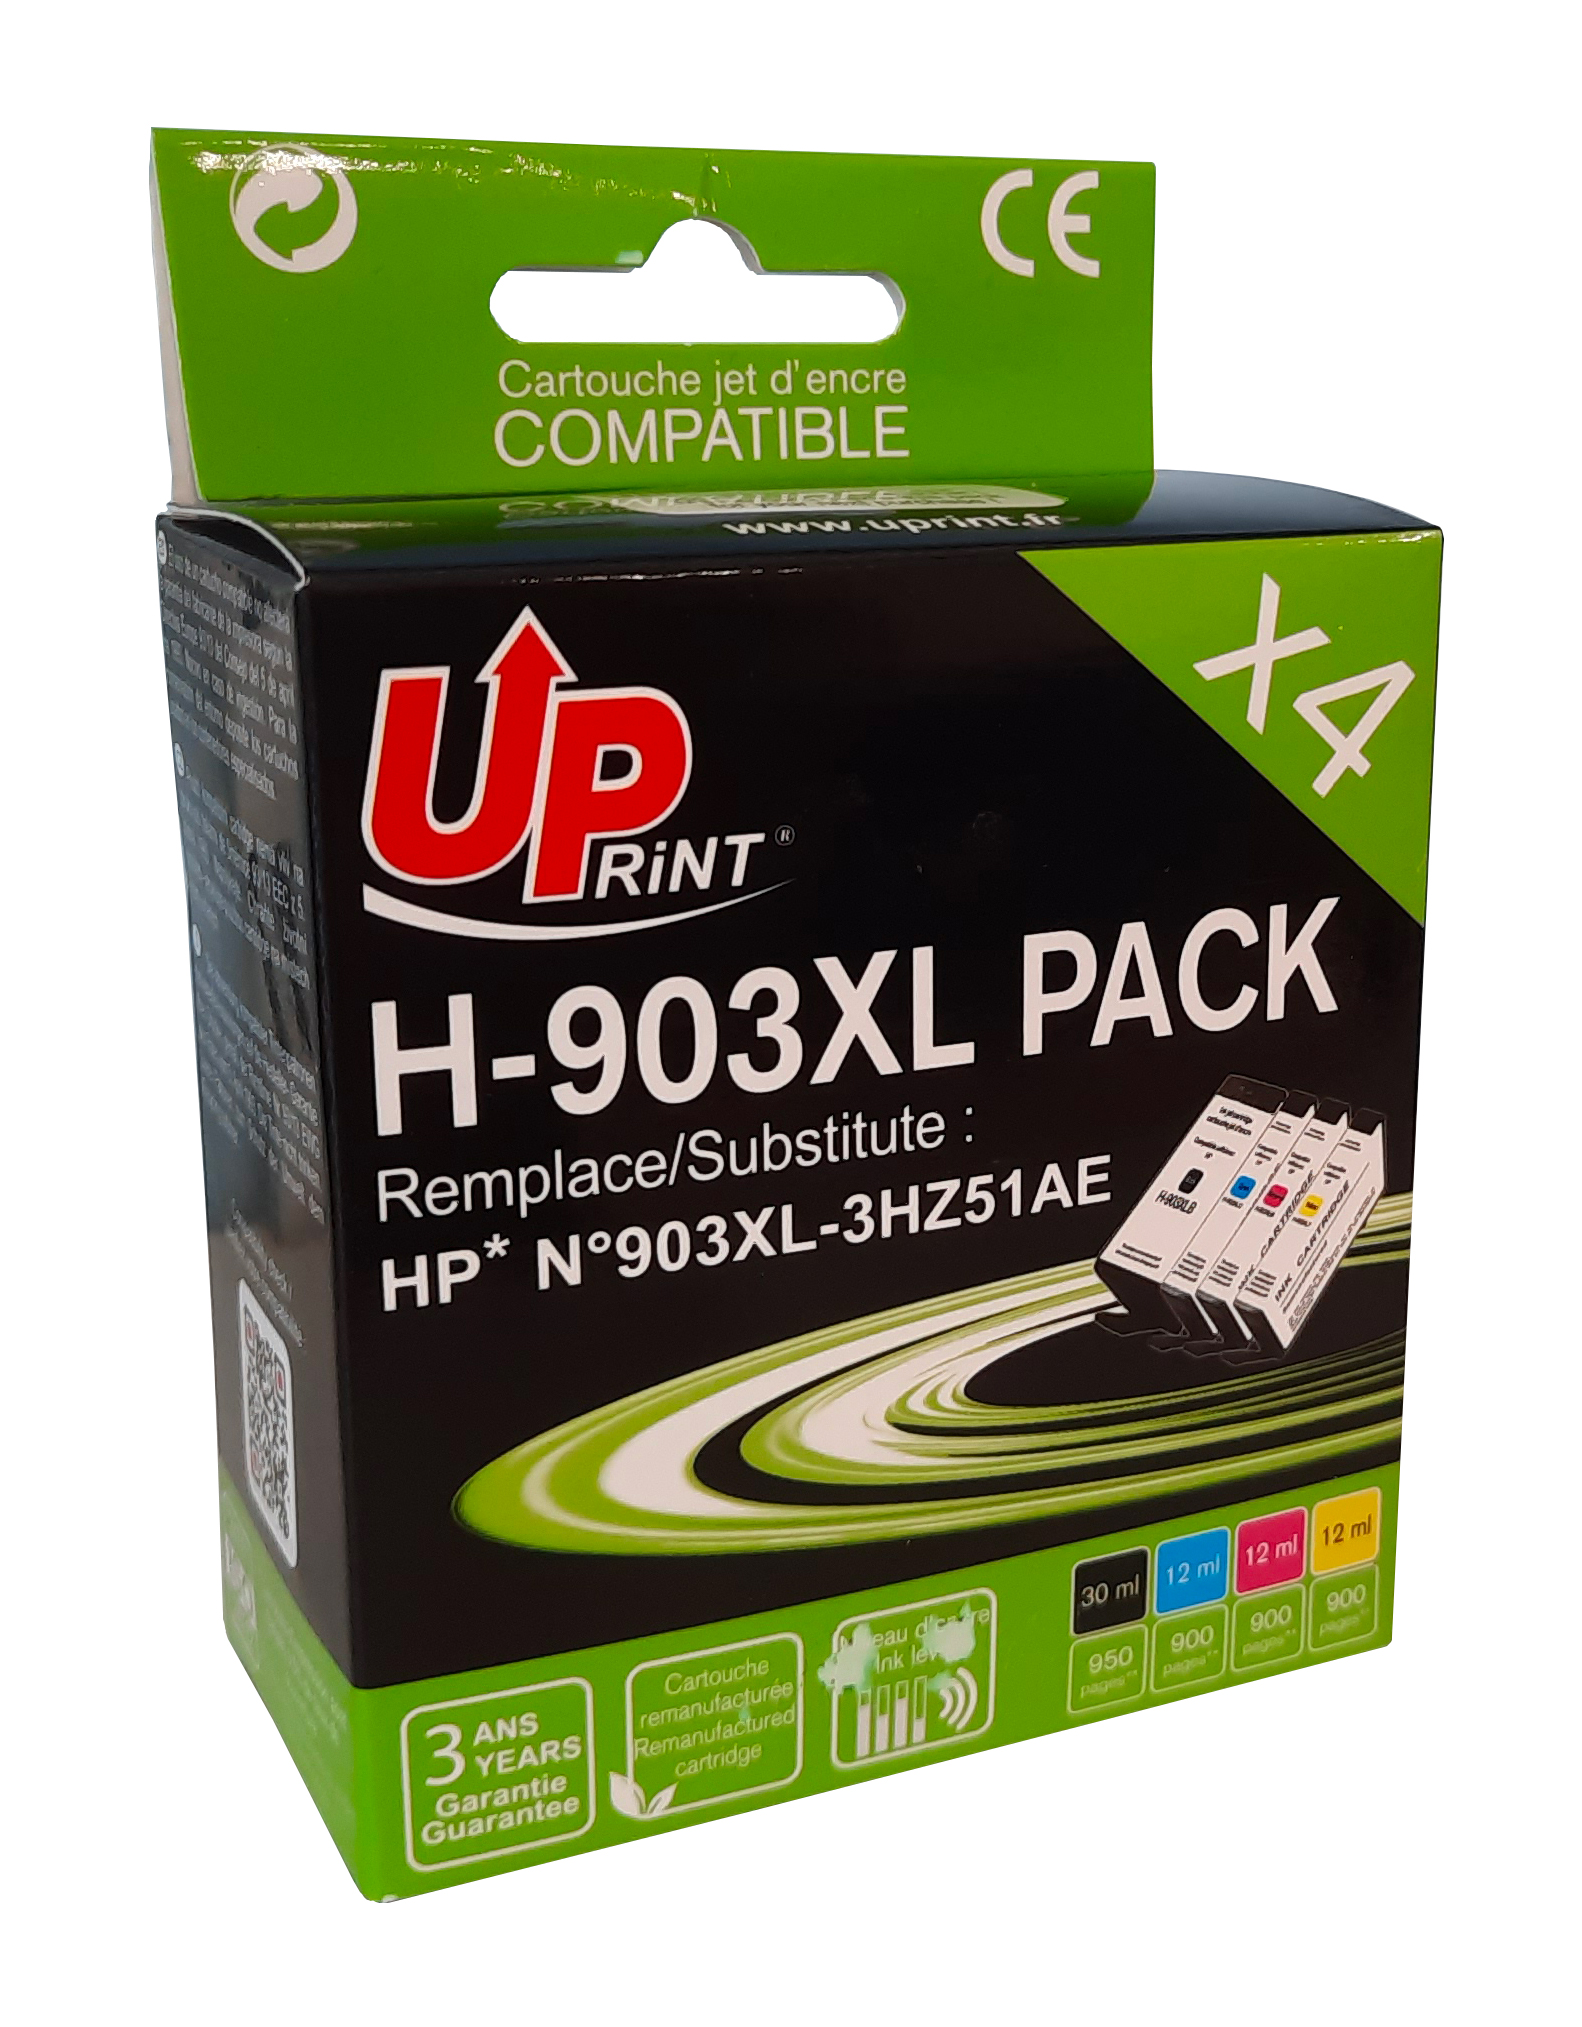 ✓ Pack UPrint compatible HP 903XL 4 cartouches couleur pack en stock -  123CONSOMMABLES